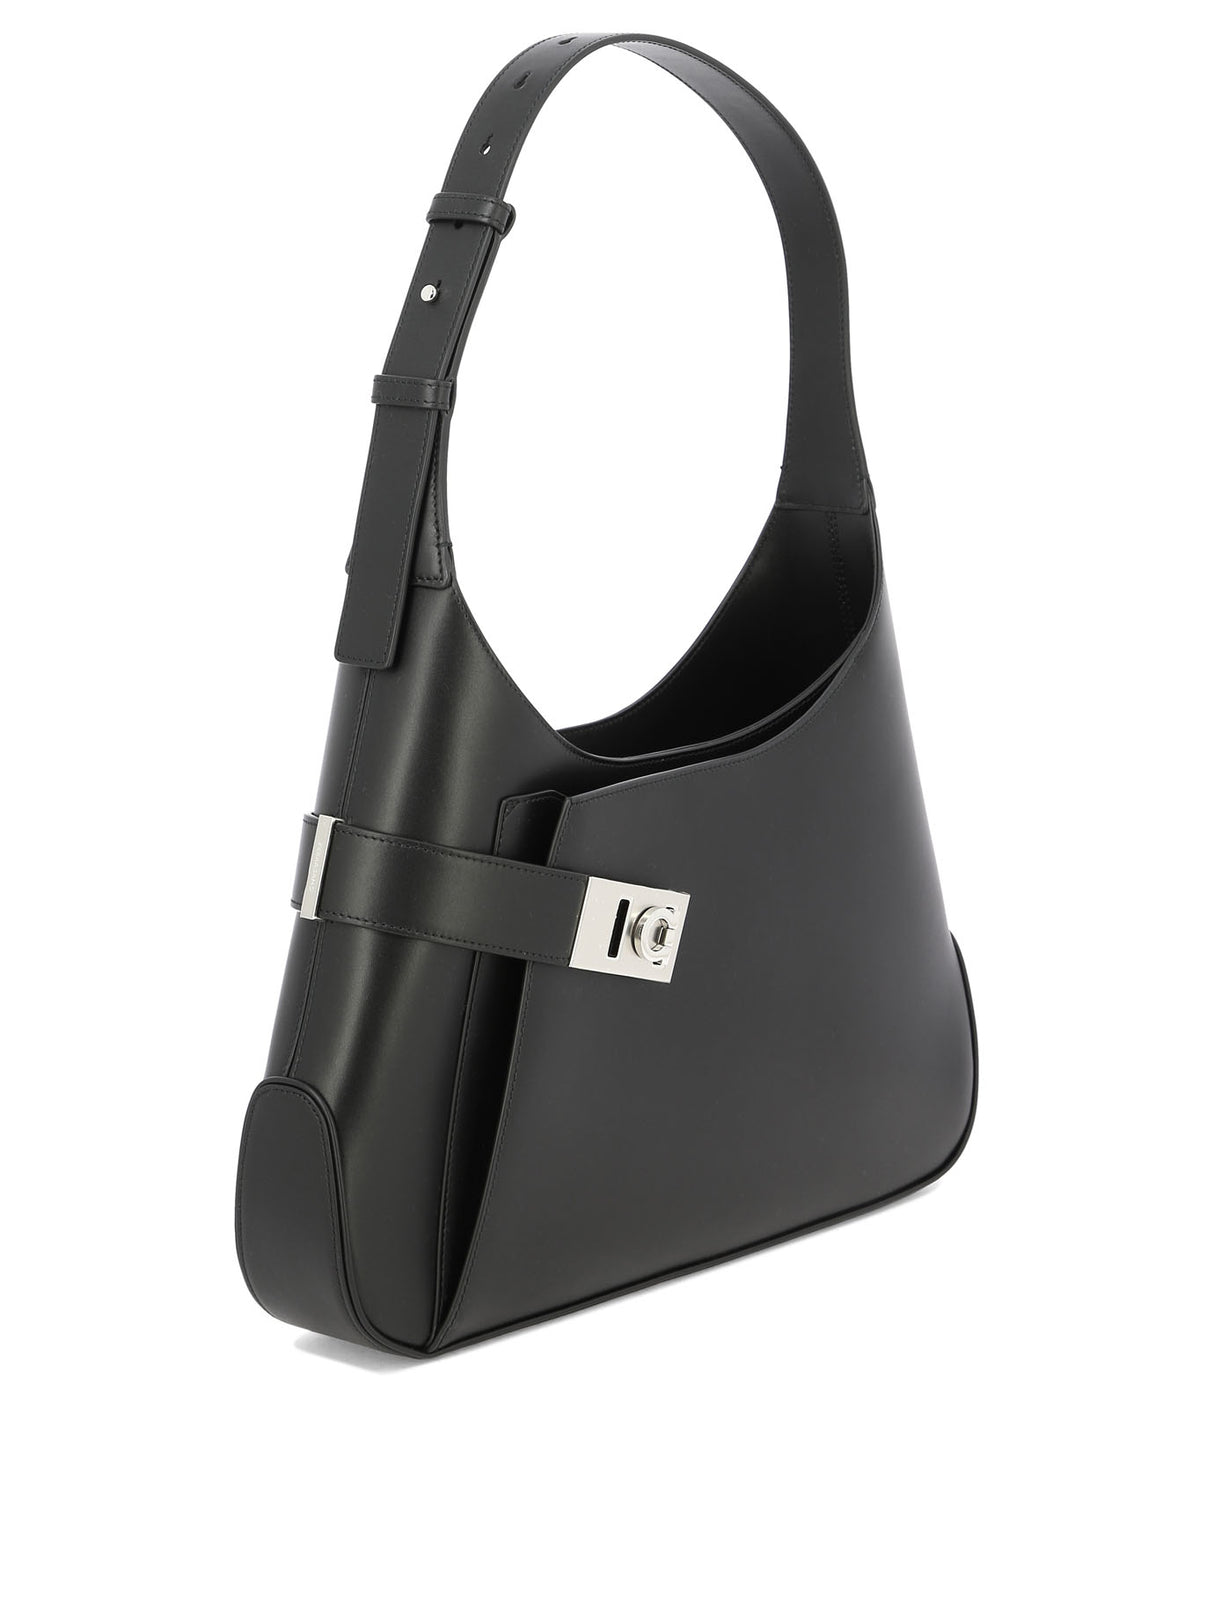 Asymmetrical Black Leather Shoulder Bag with Gancini Hook Buckle for Women